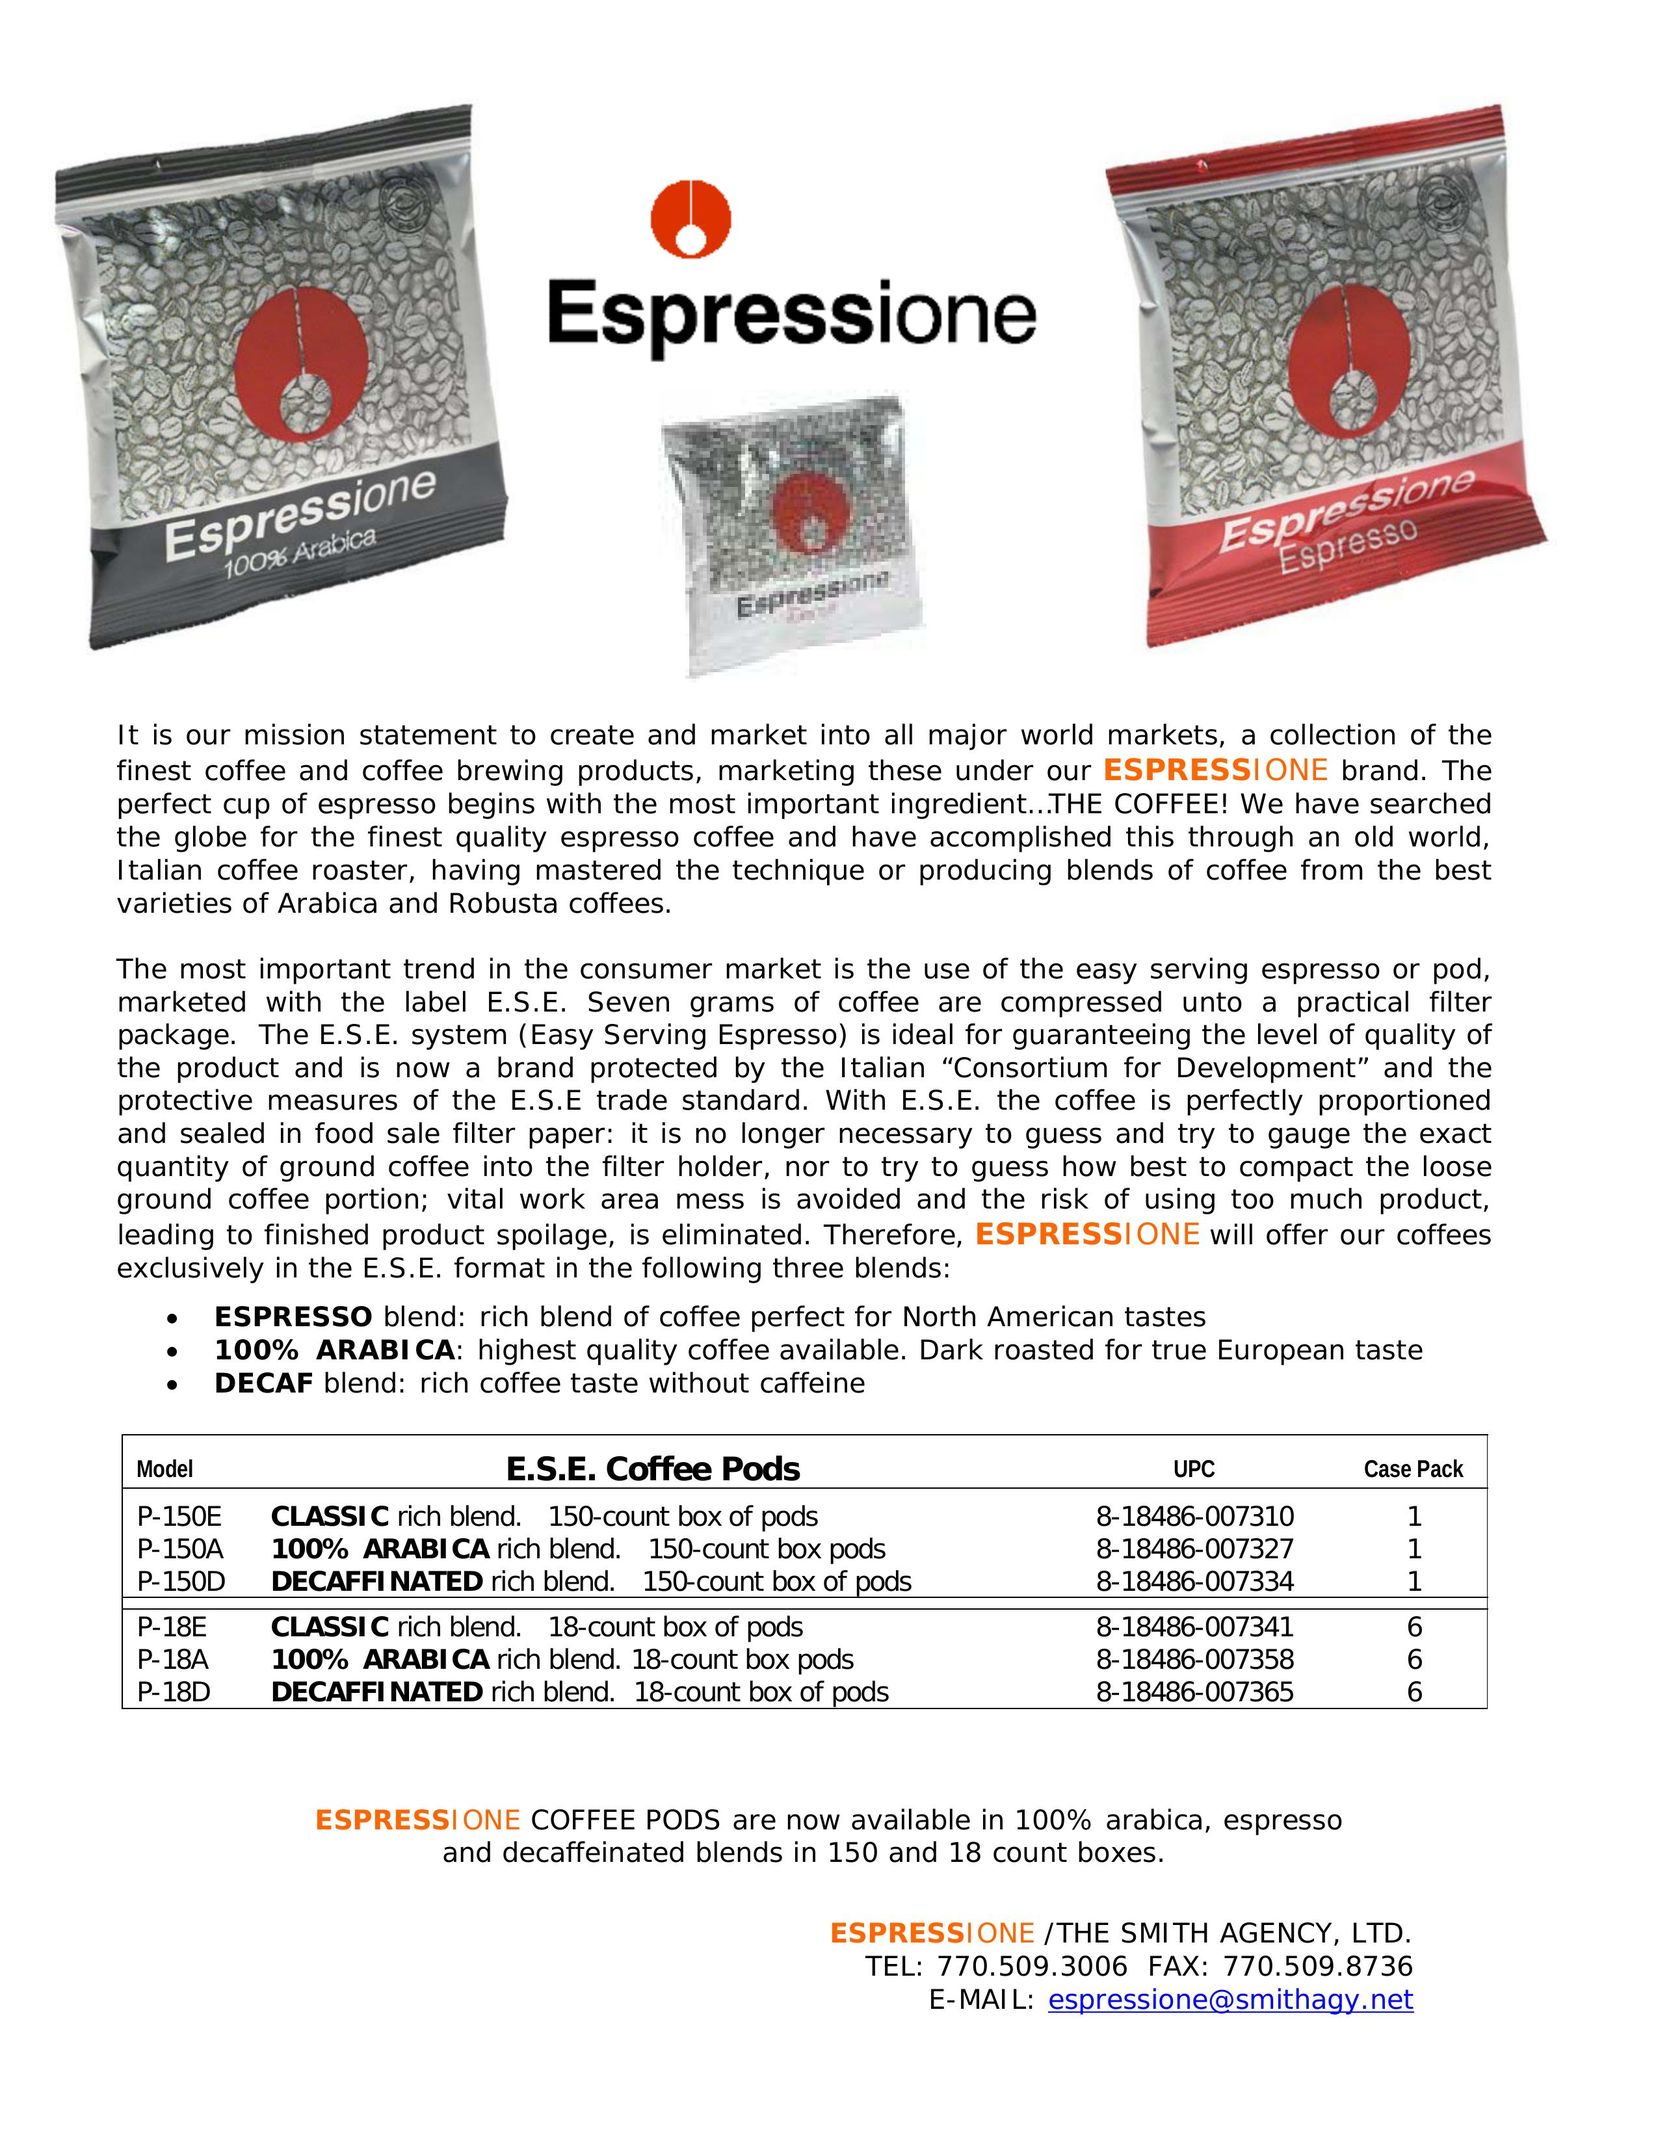 THE SMITH AGENCY P-150A Espresso Maker User Manual